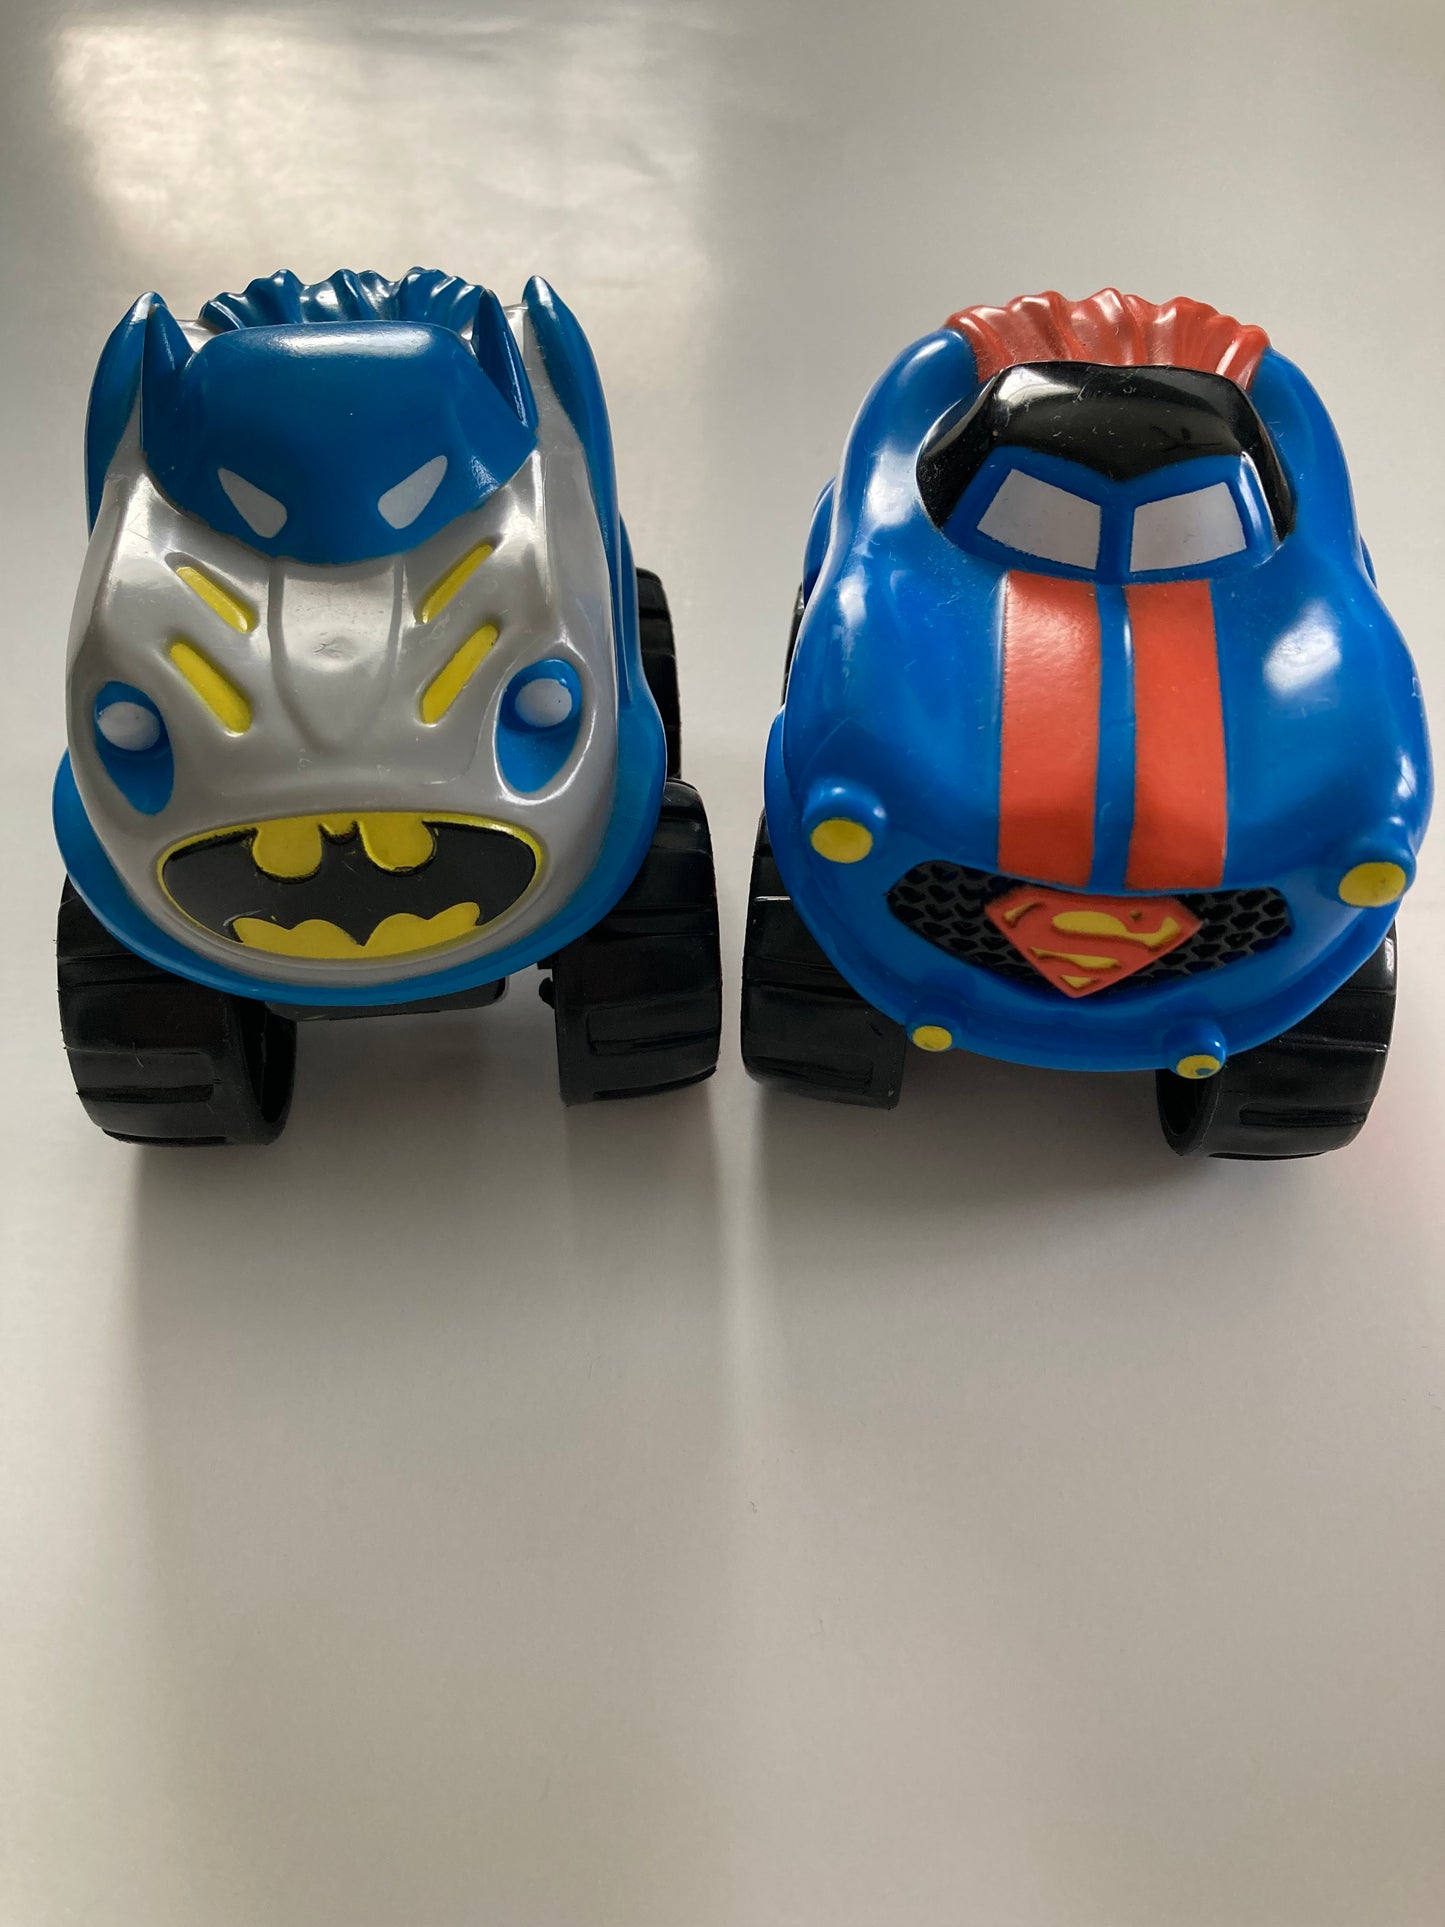 Batman and Superman cars